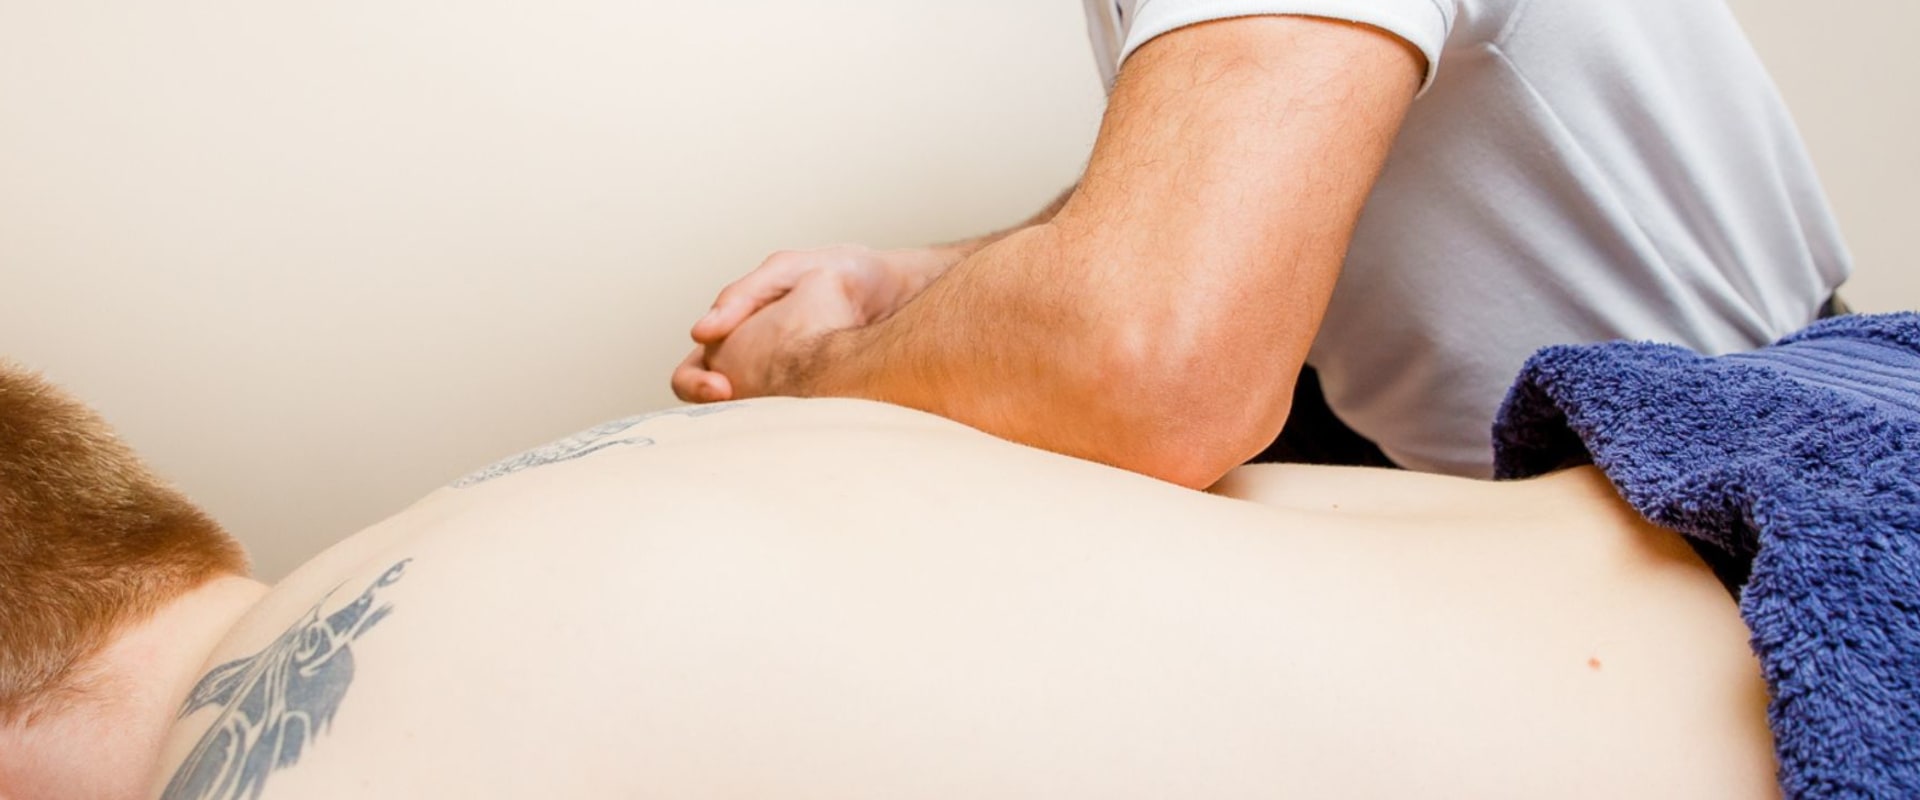 When should you not get a deep tissue massage?